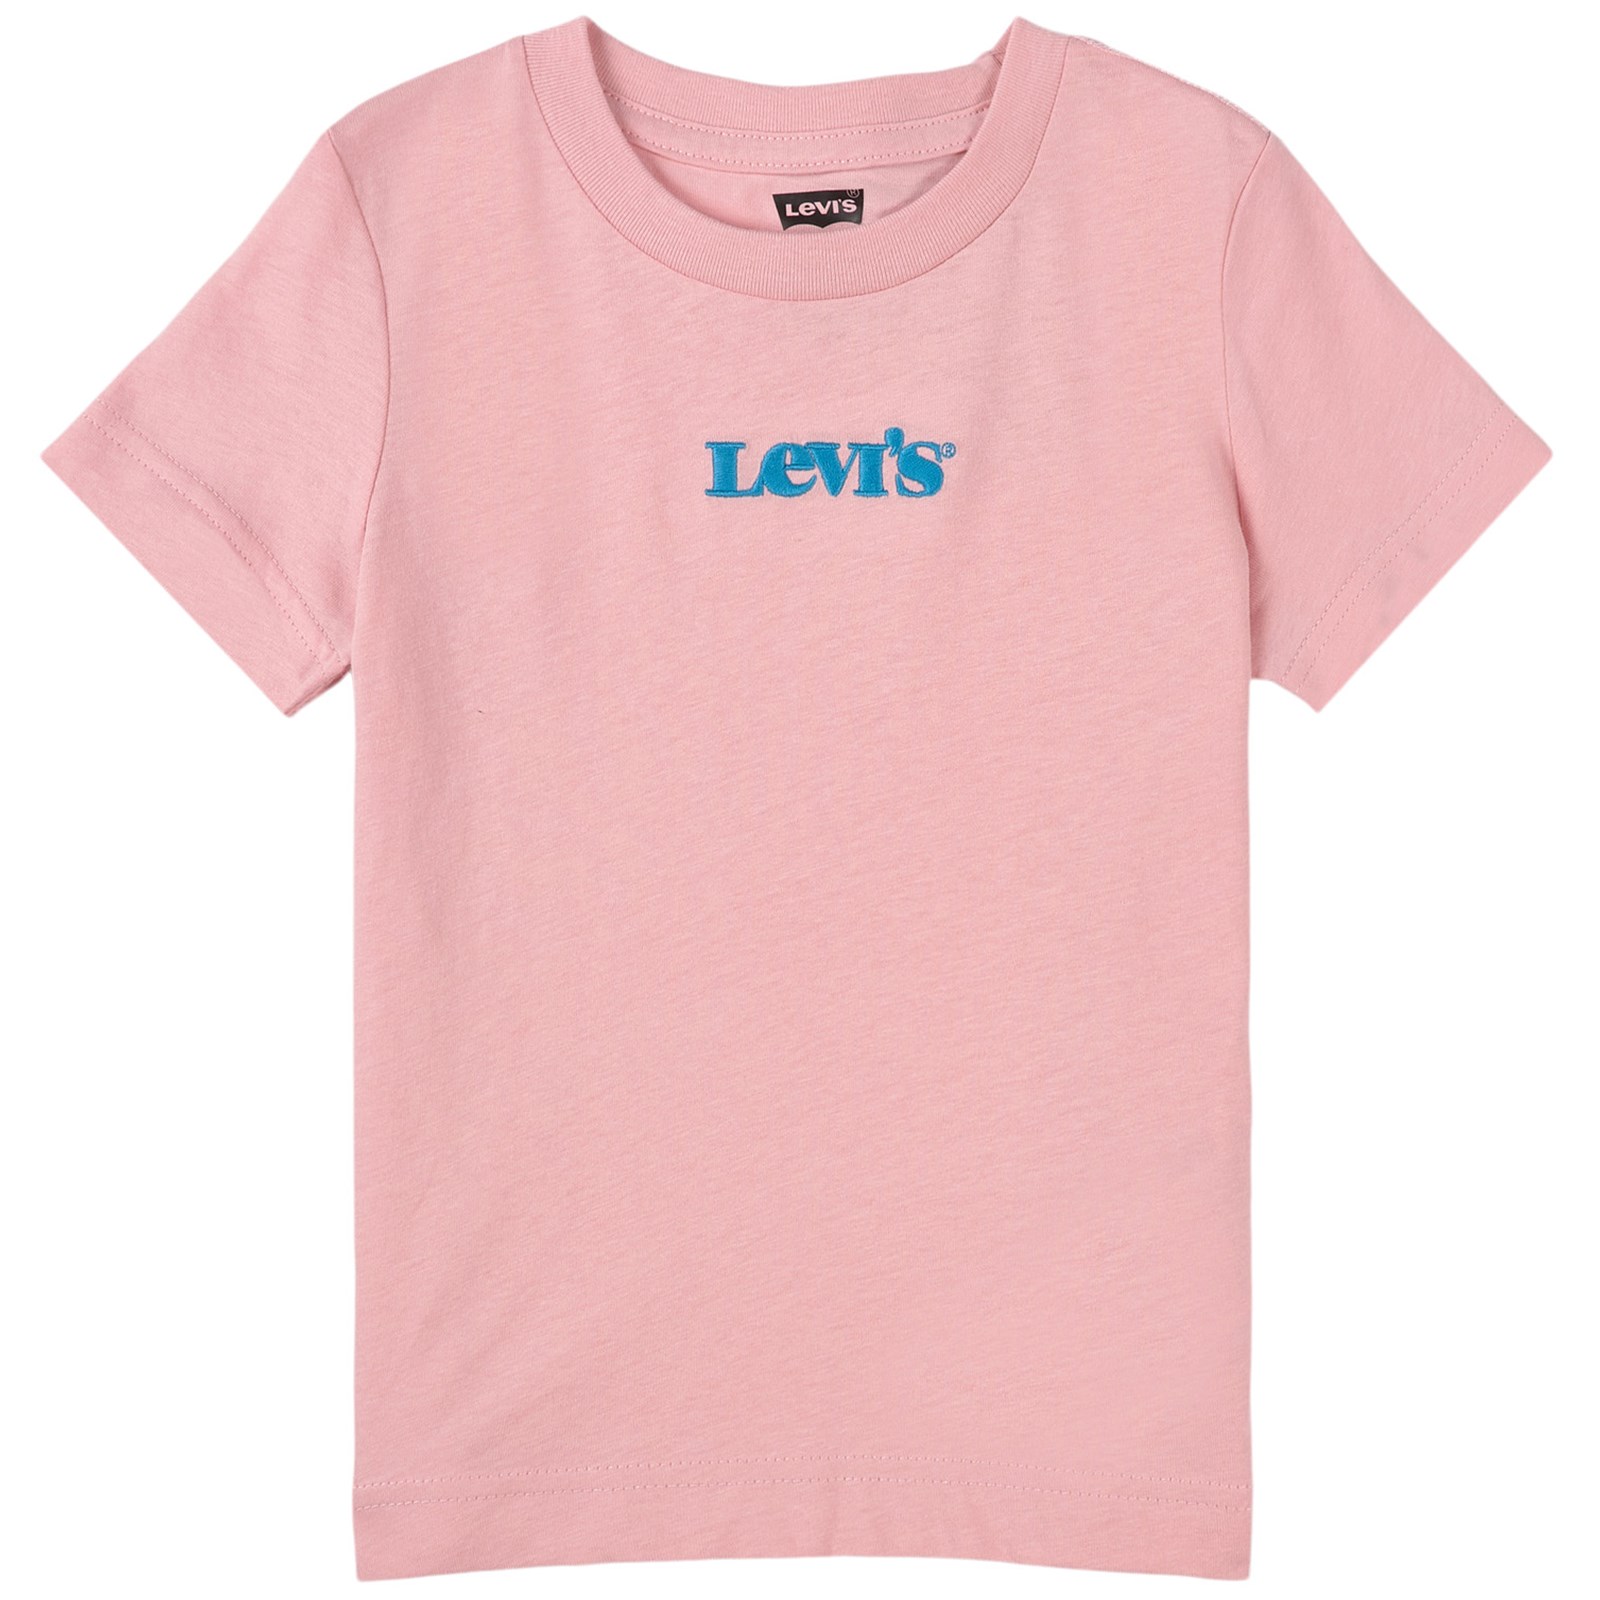 Levis Pink